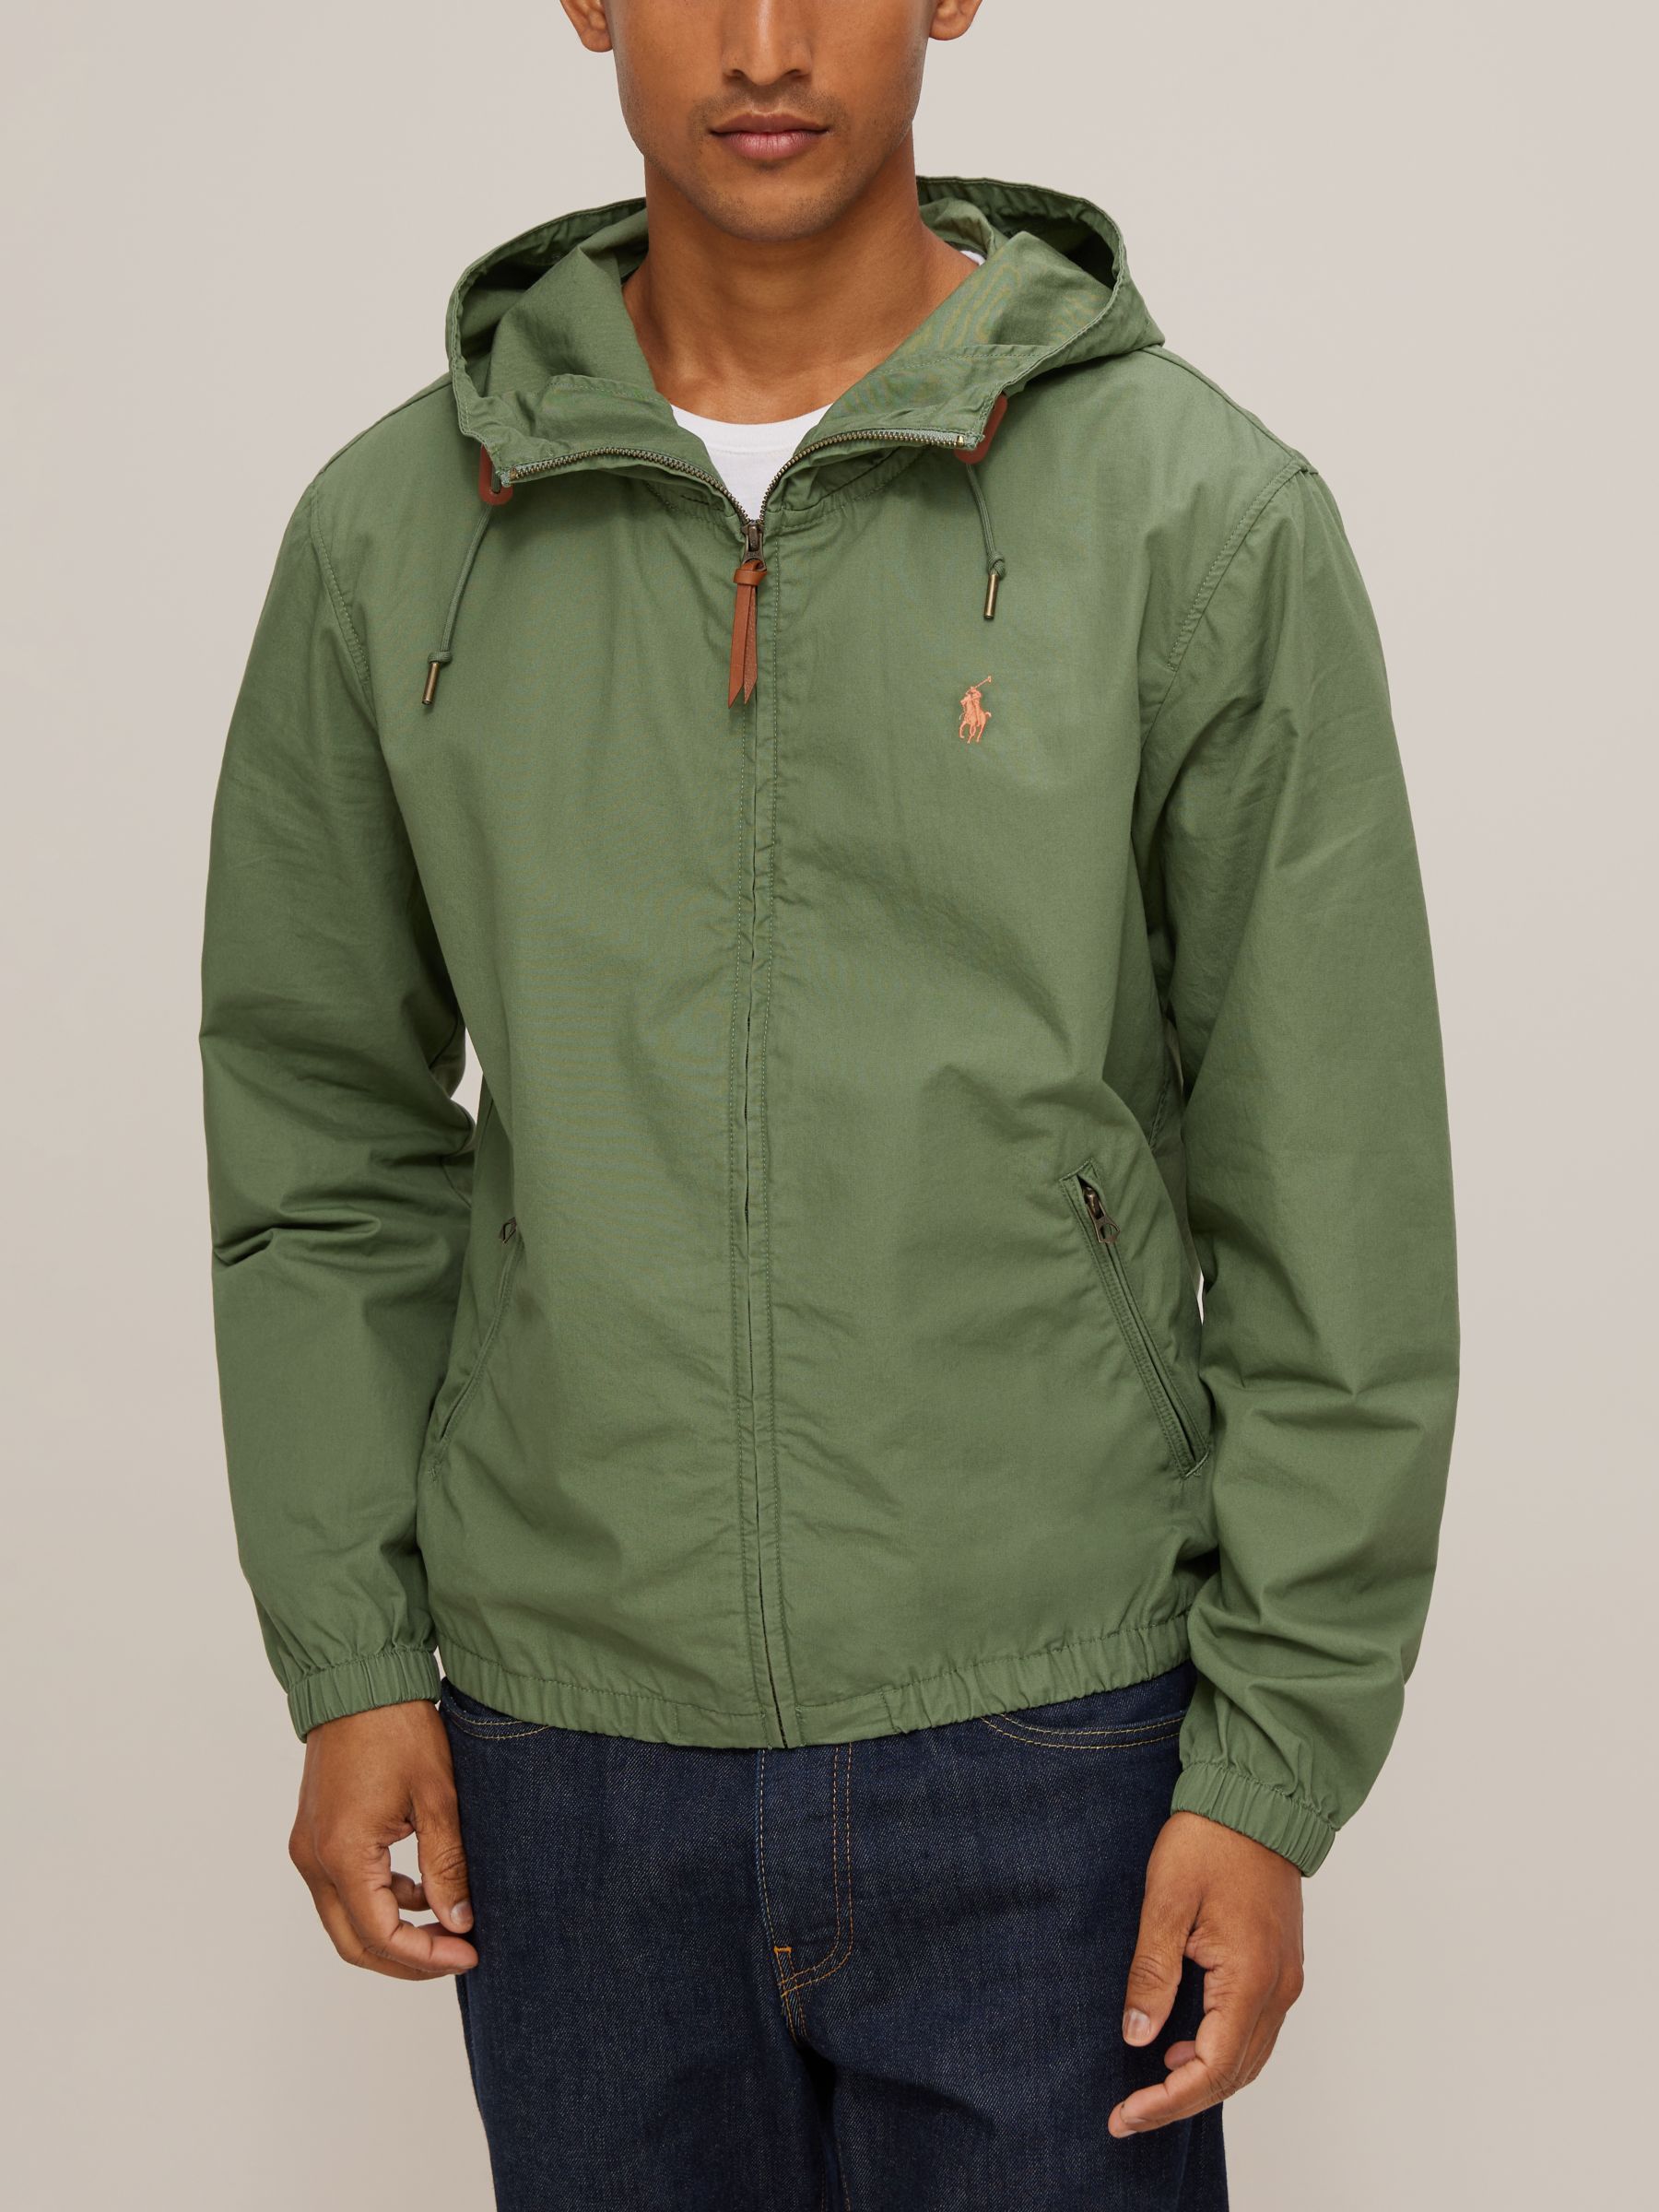 Polo Ralph Lauren Cotton Poplin Hooded Jacket, Cargo Green at John Lewis & Partners